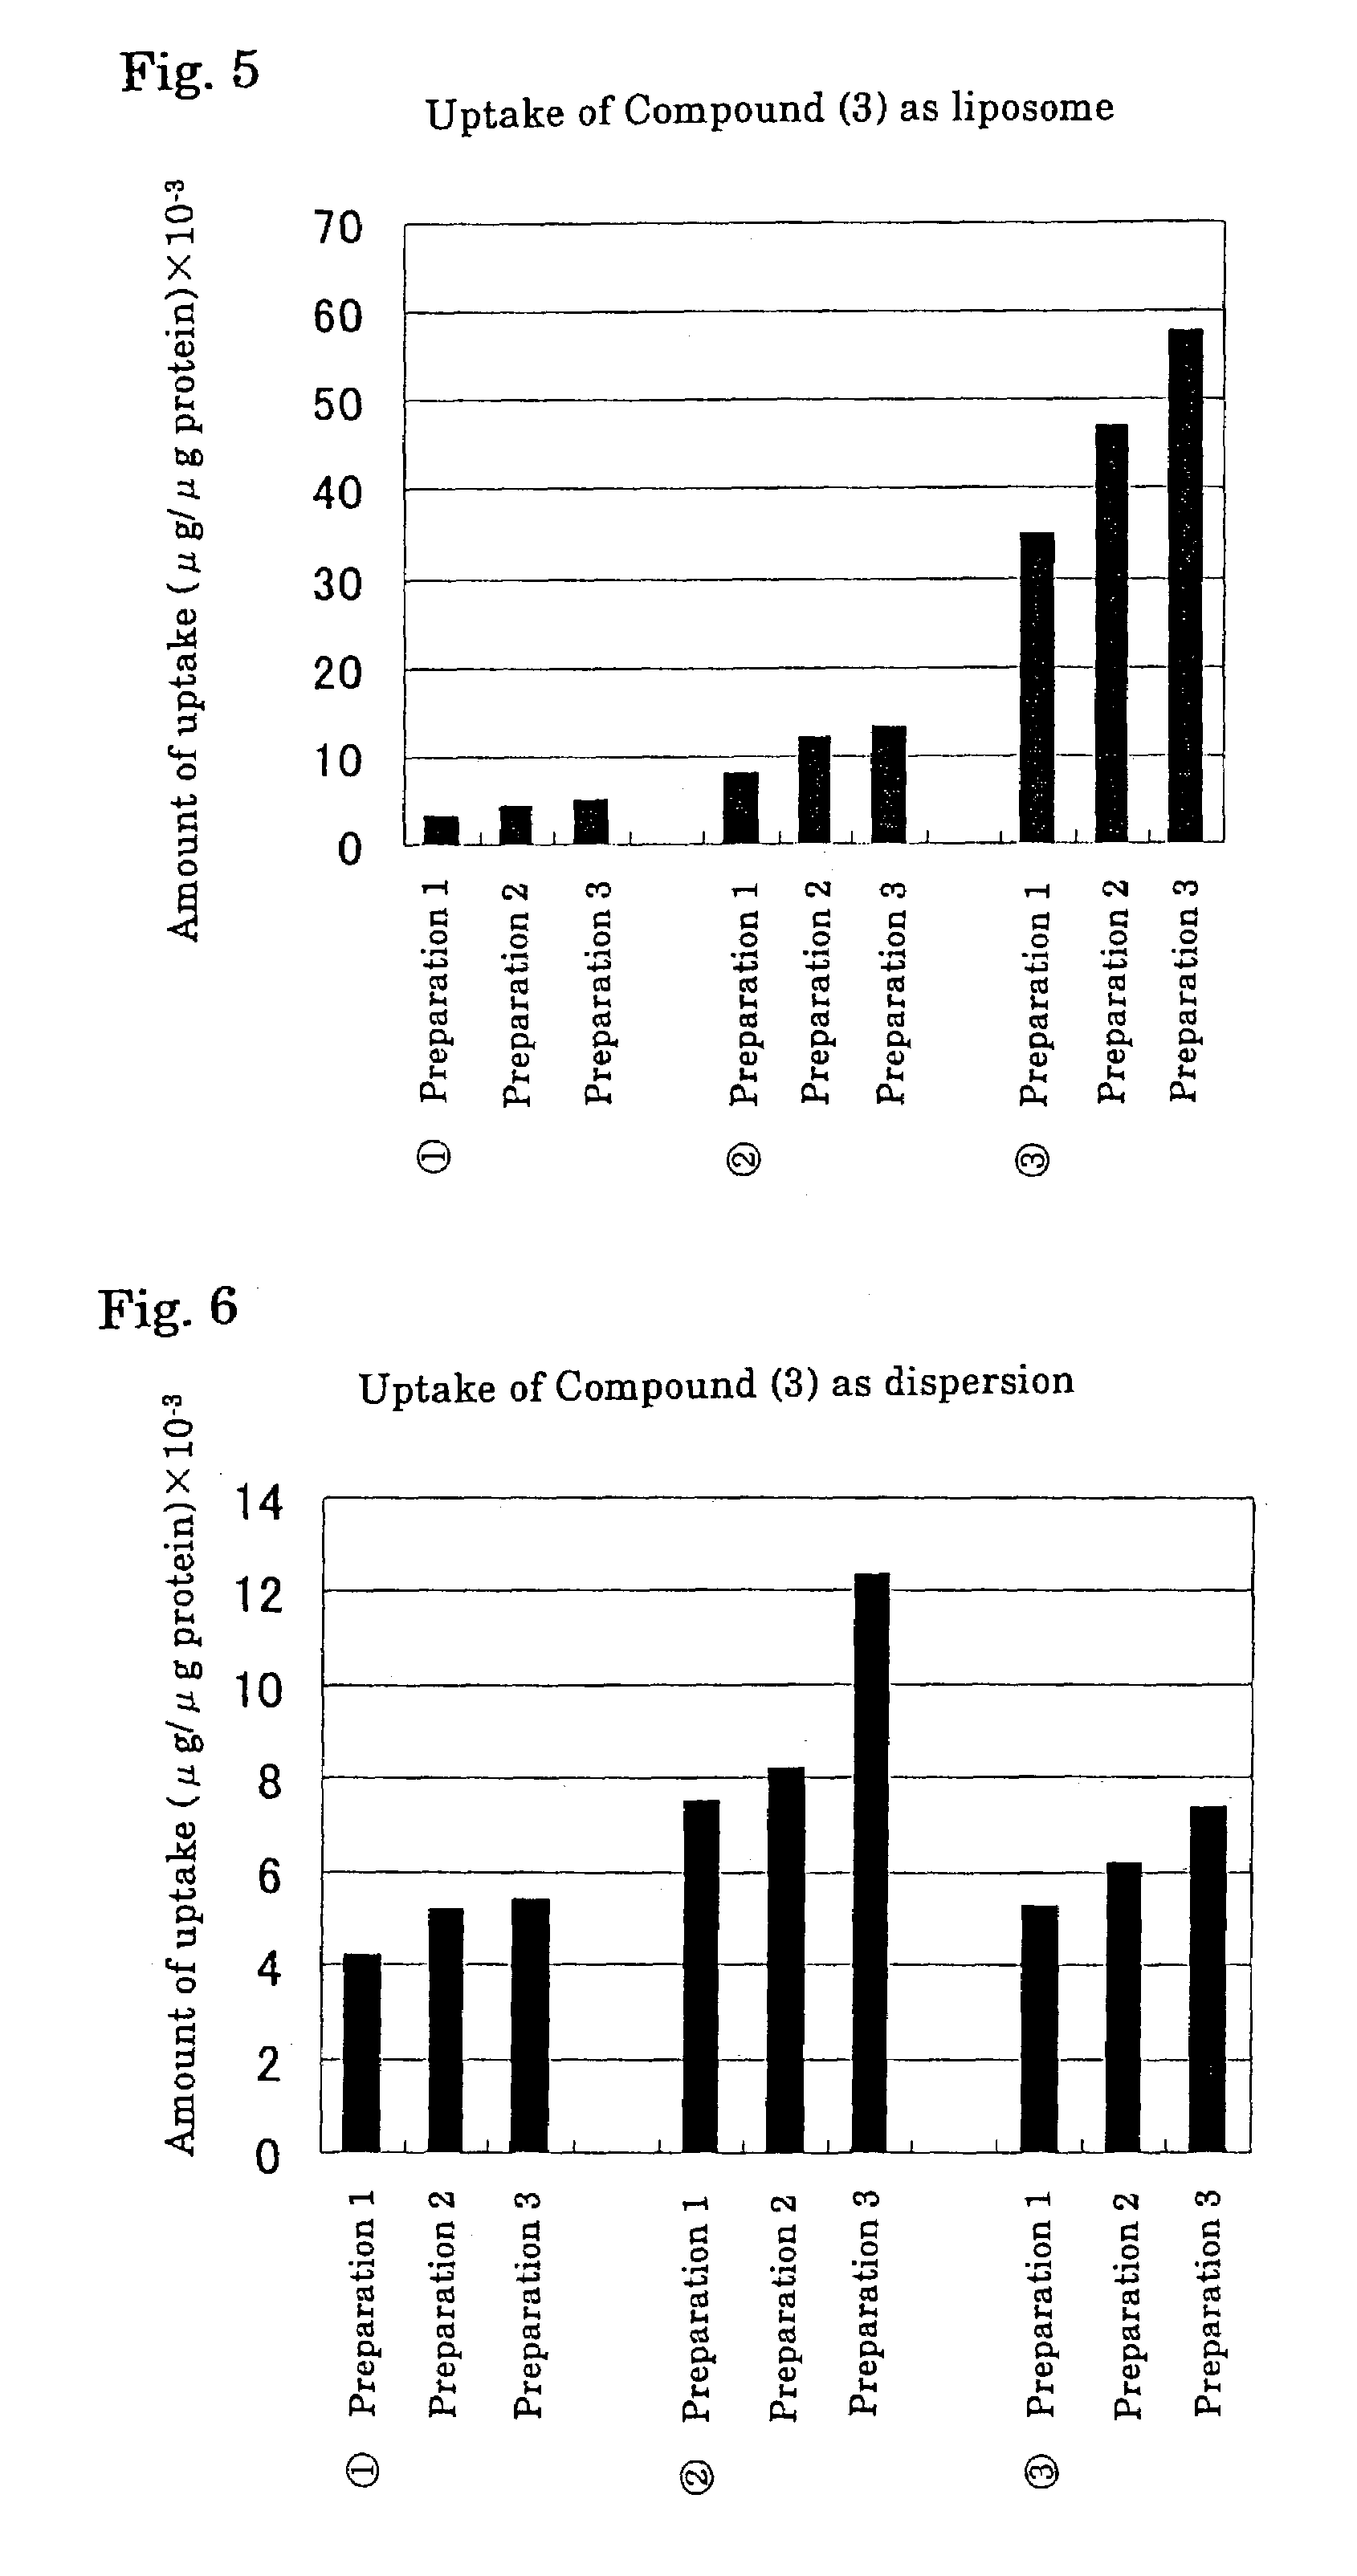 Liposome containing hydrophobic iodine compound